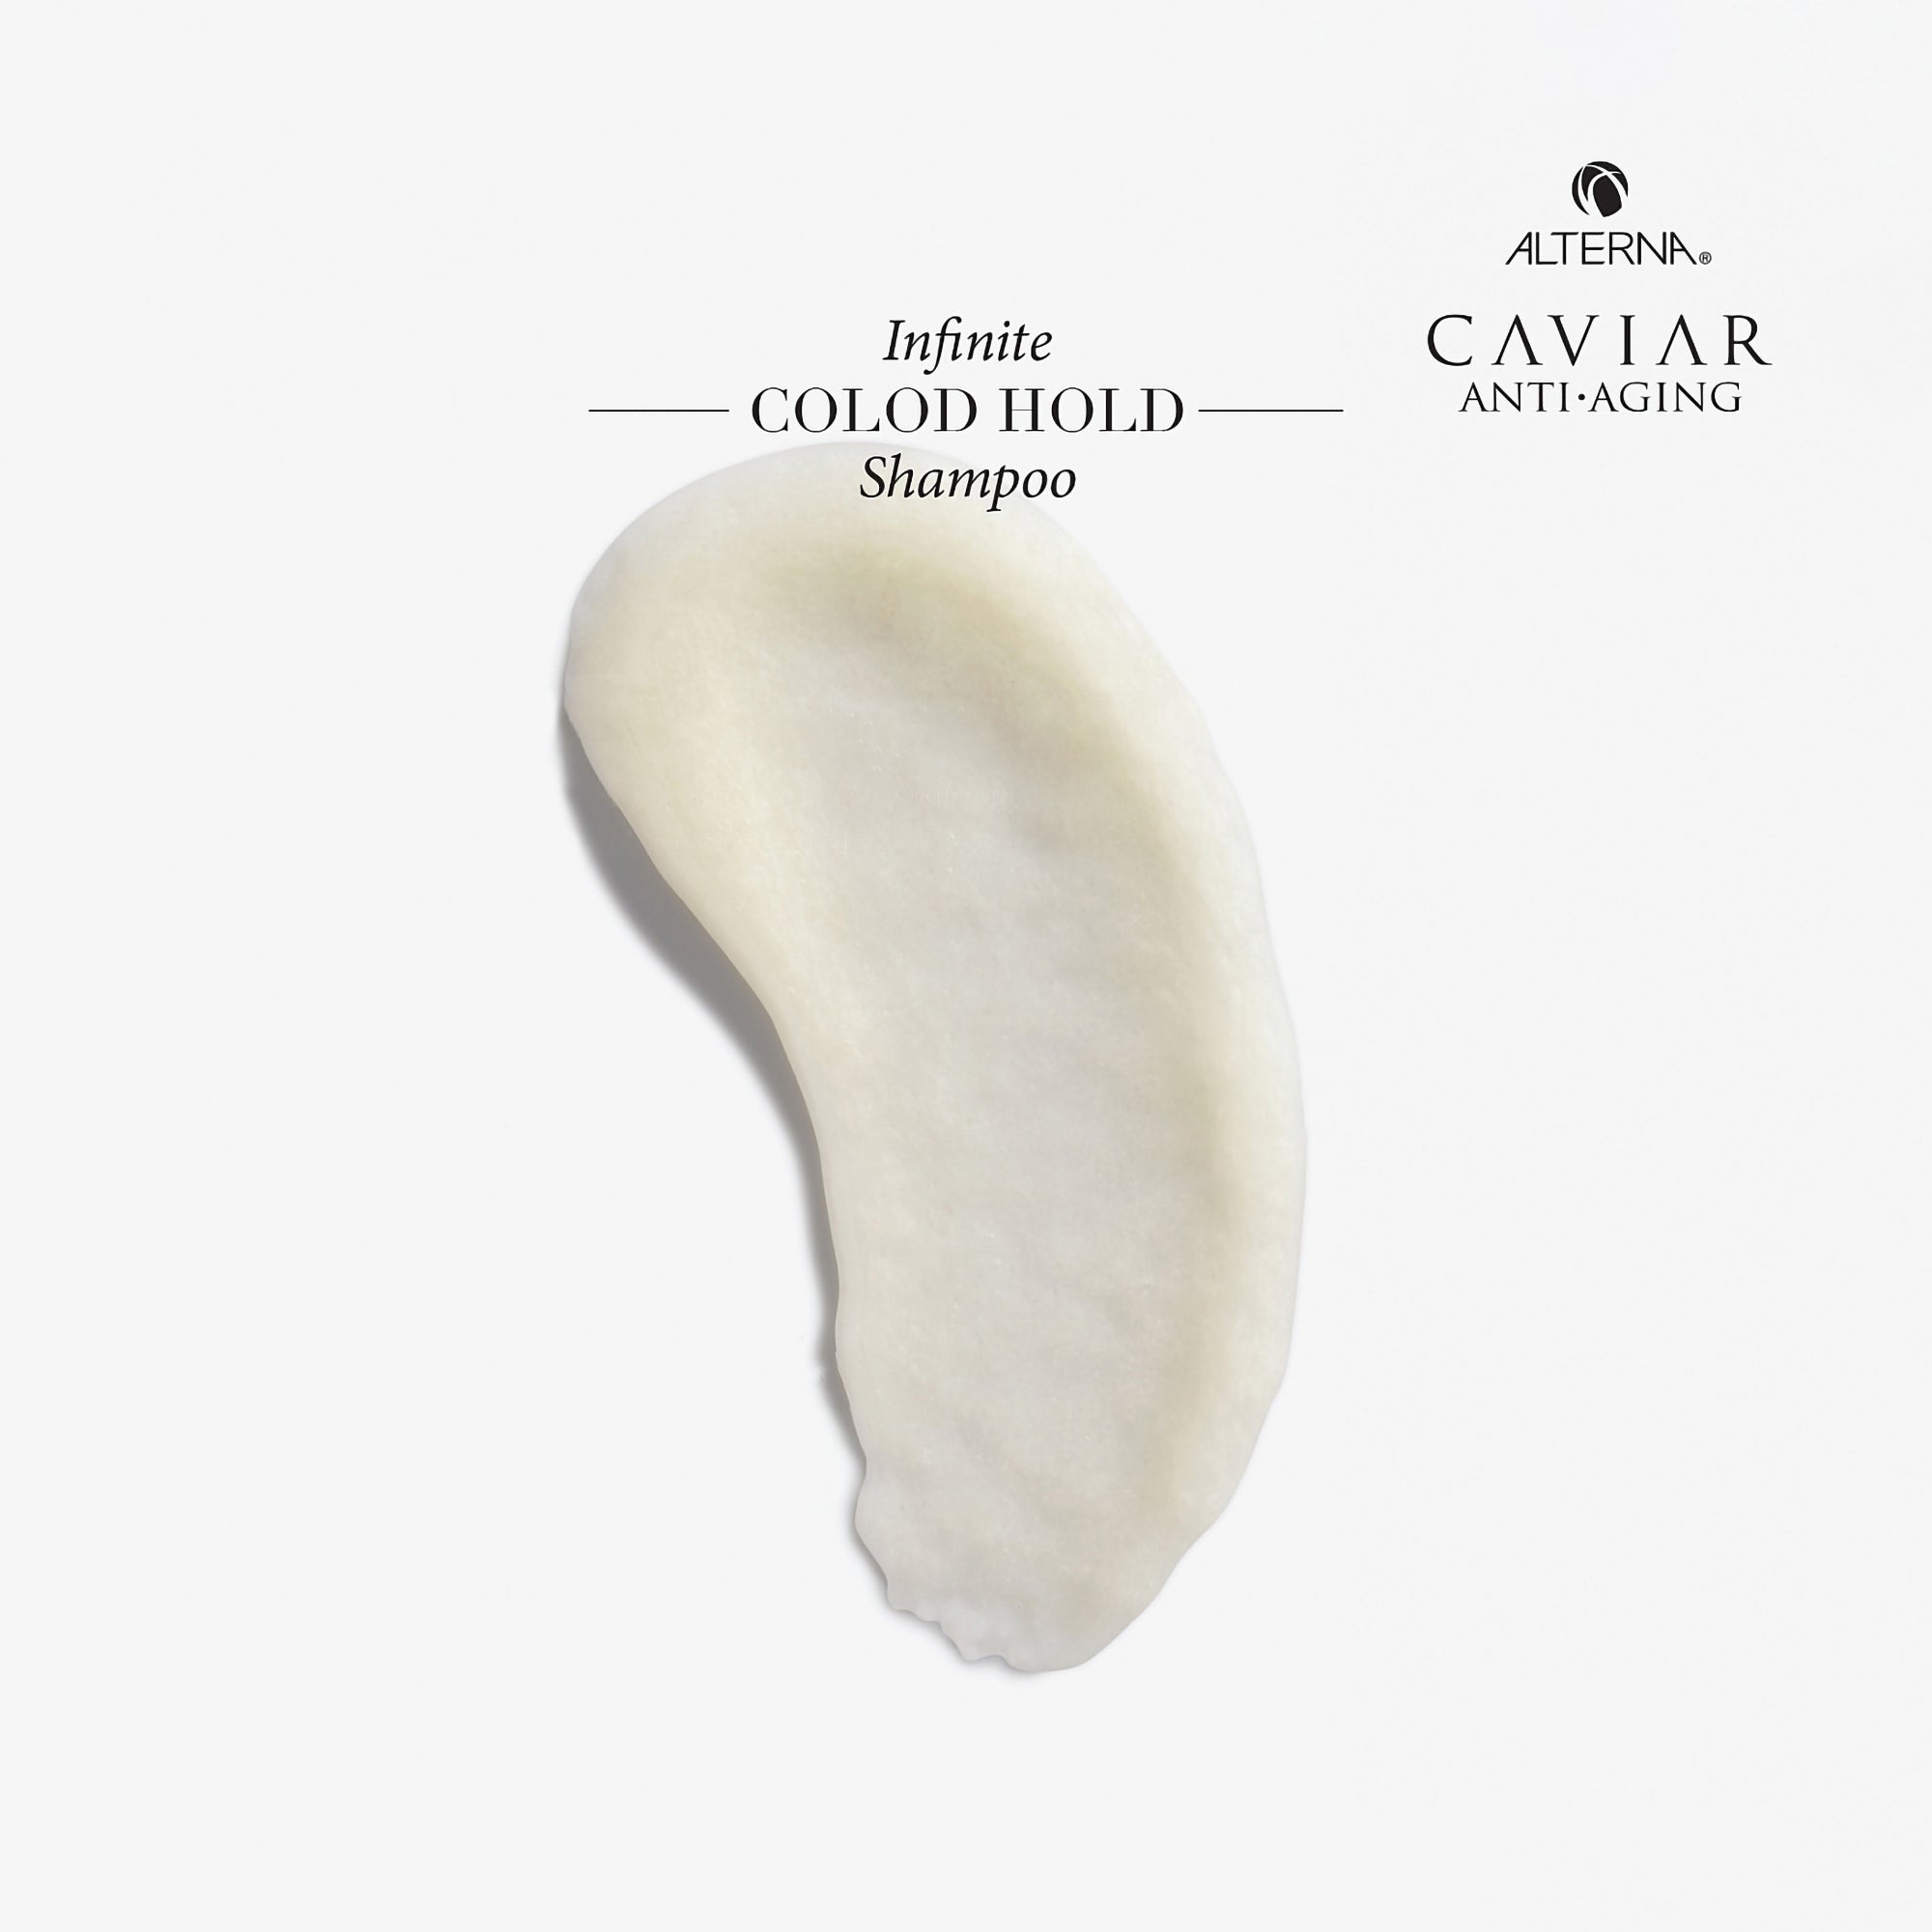 Alterna Caviar Anti-Aging Infinite Color Hold Shampoo / 8.5OZ